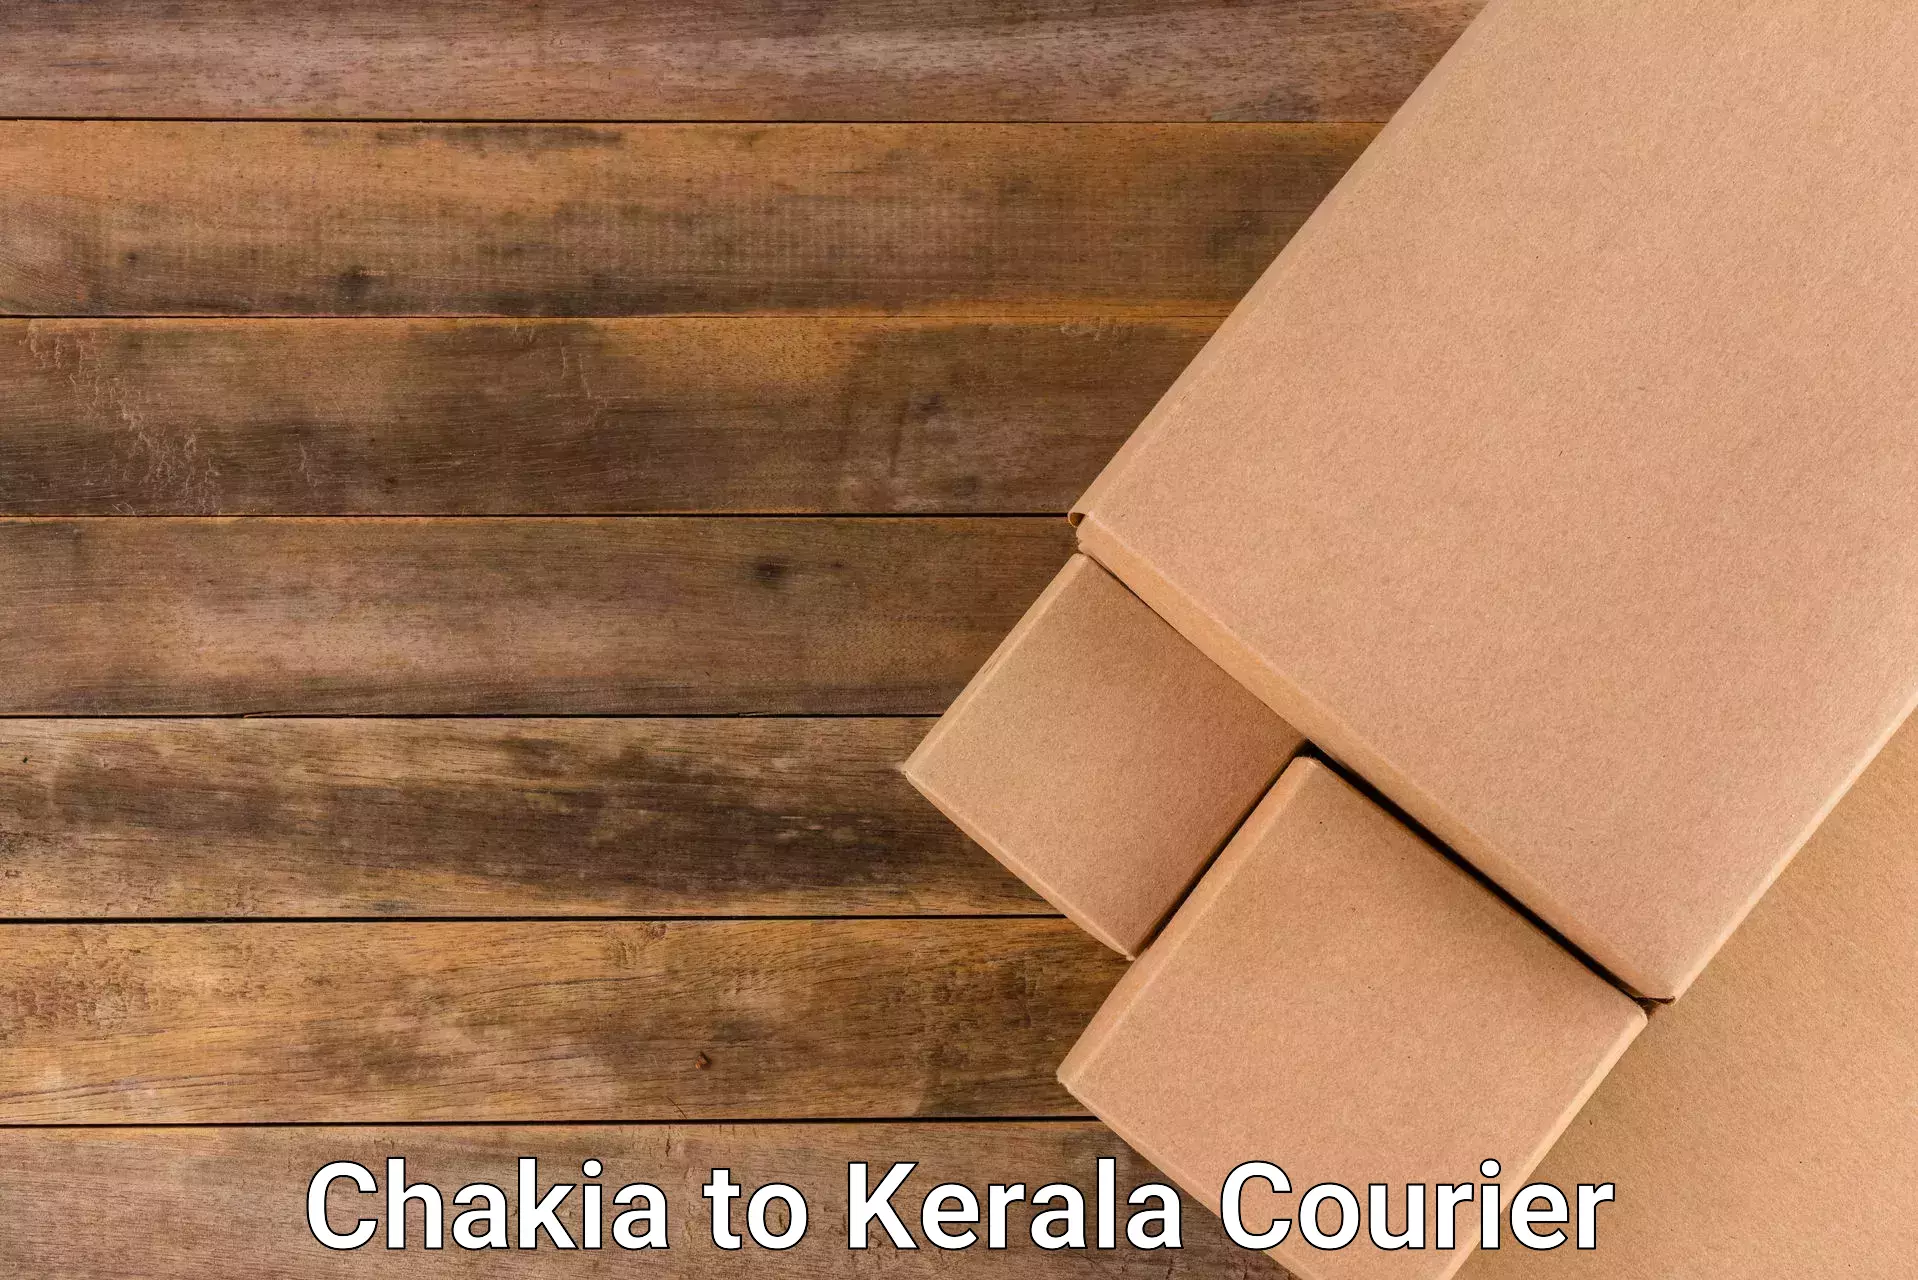 Logistics service provider Chakia to Kerala